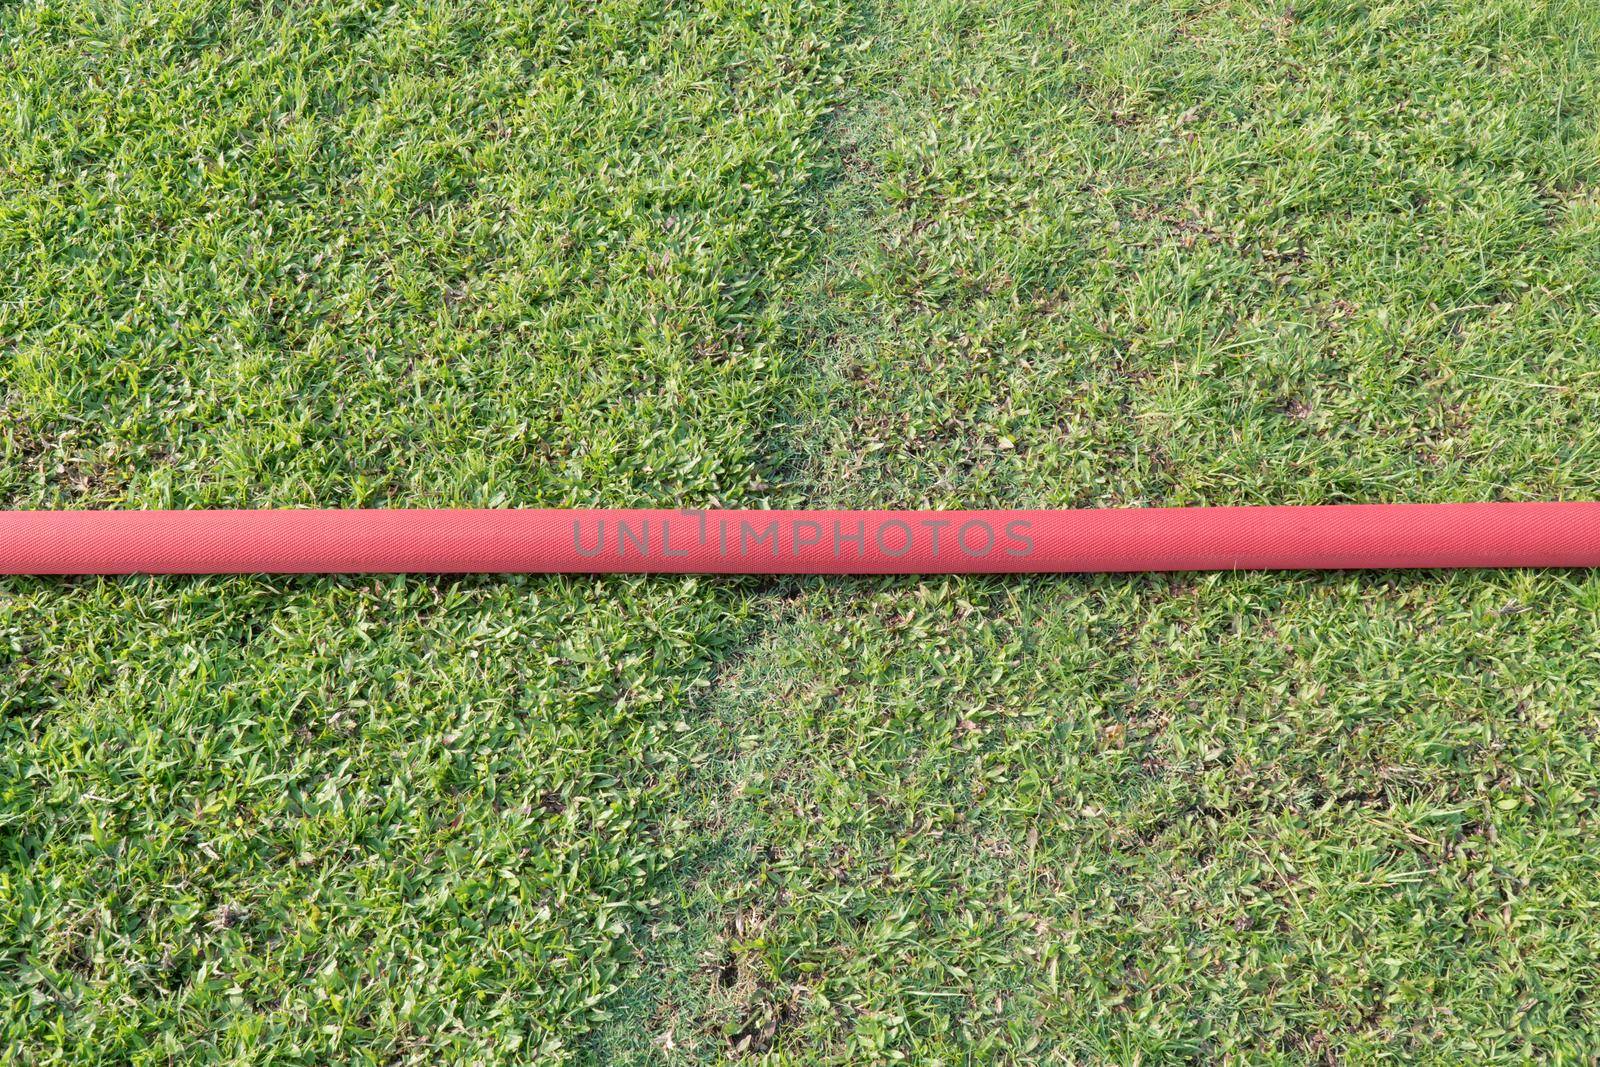 industrial hose in lawn of sport field. by toa55